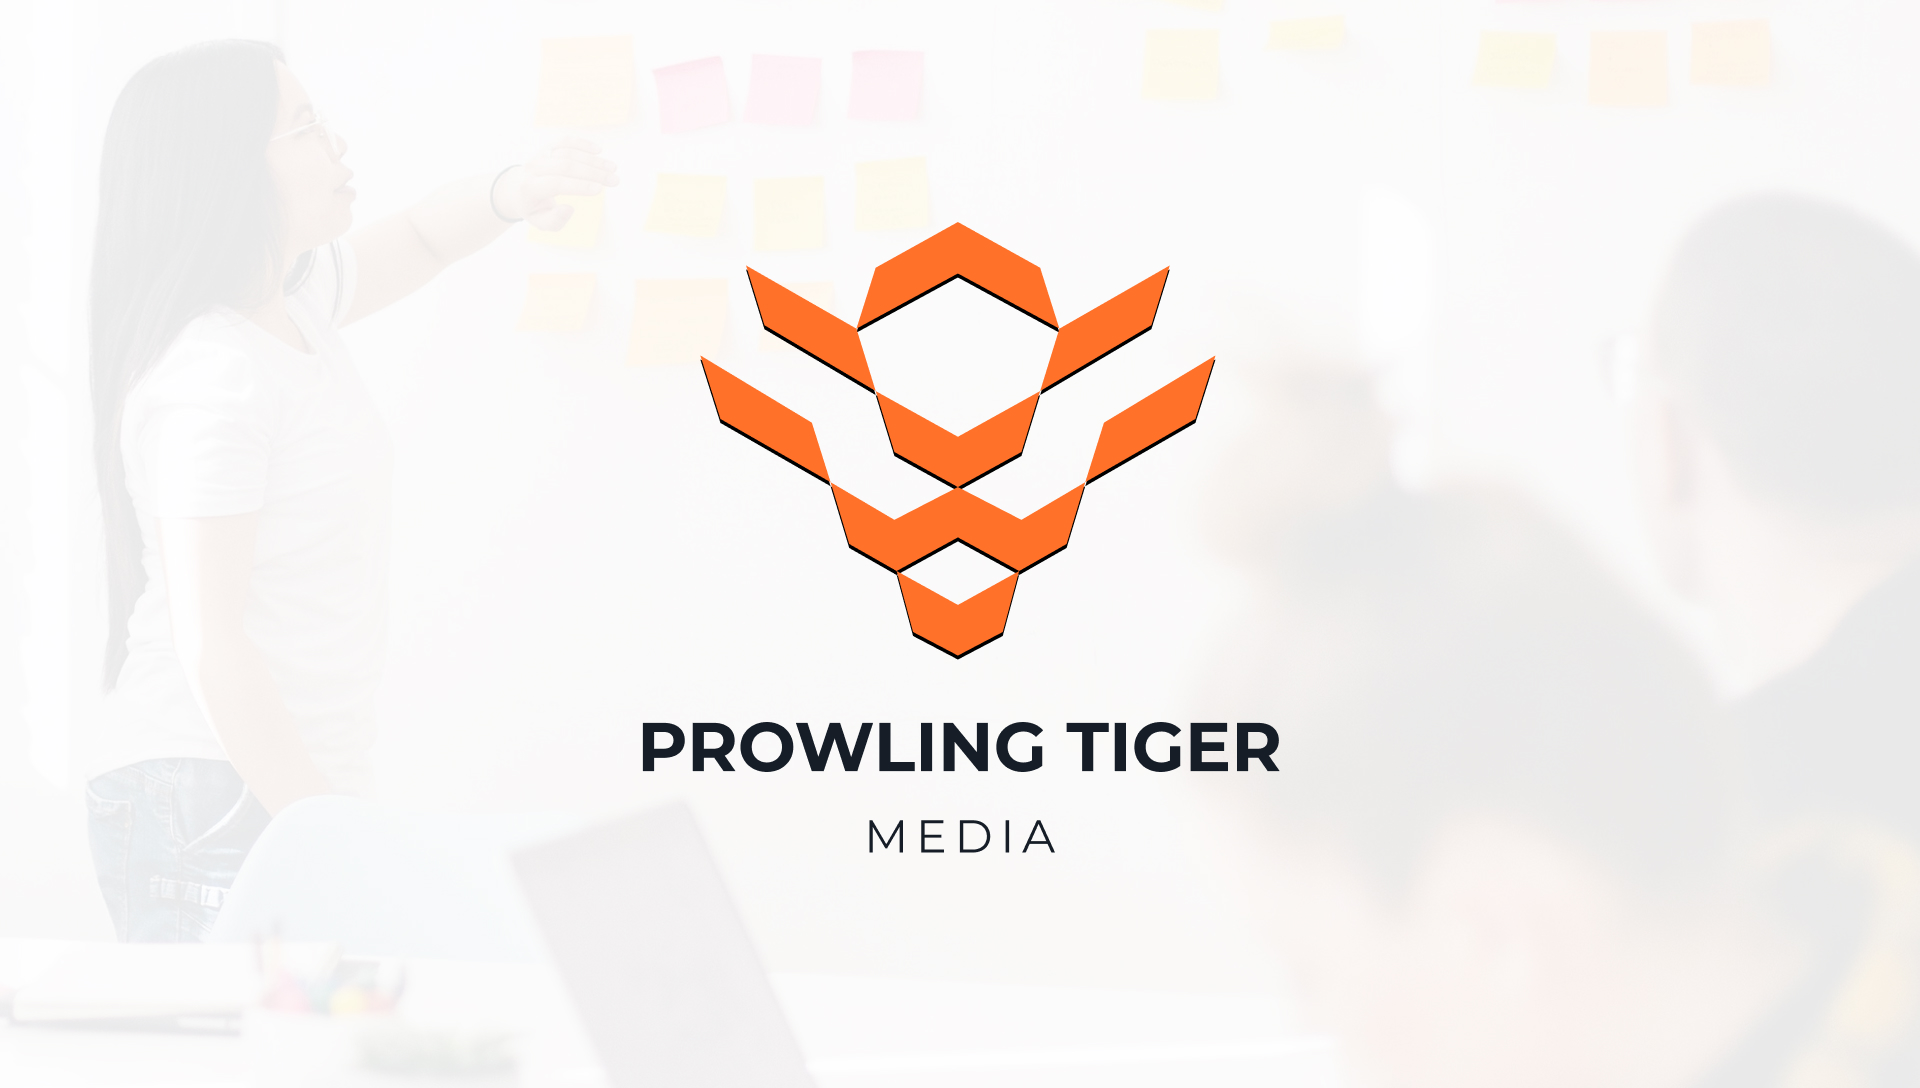 Prowling Tiger Media